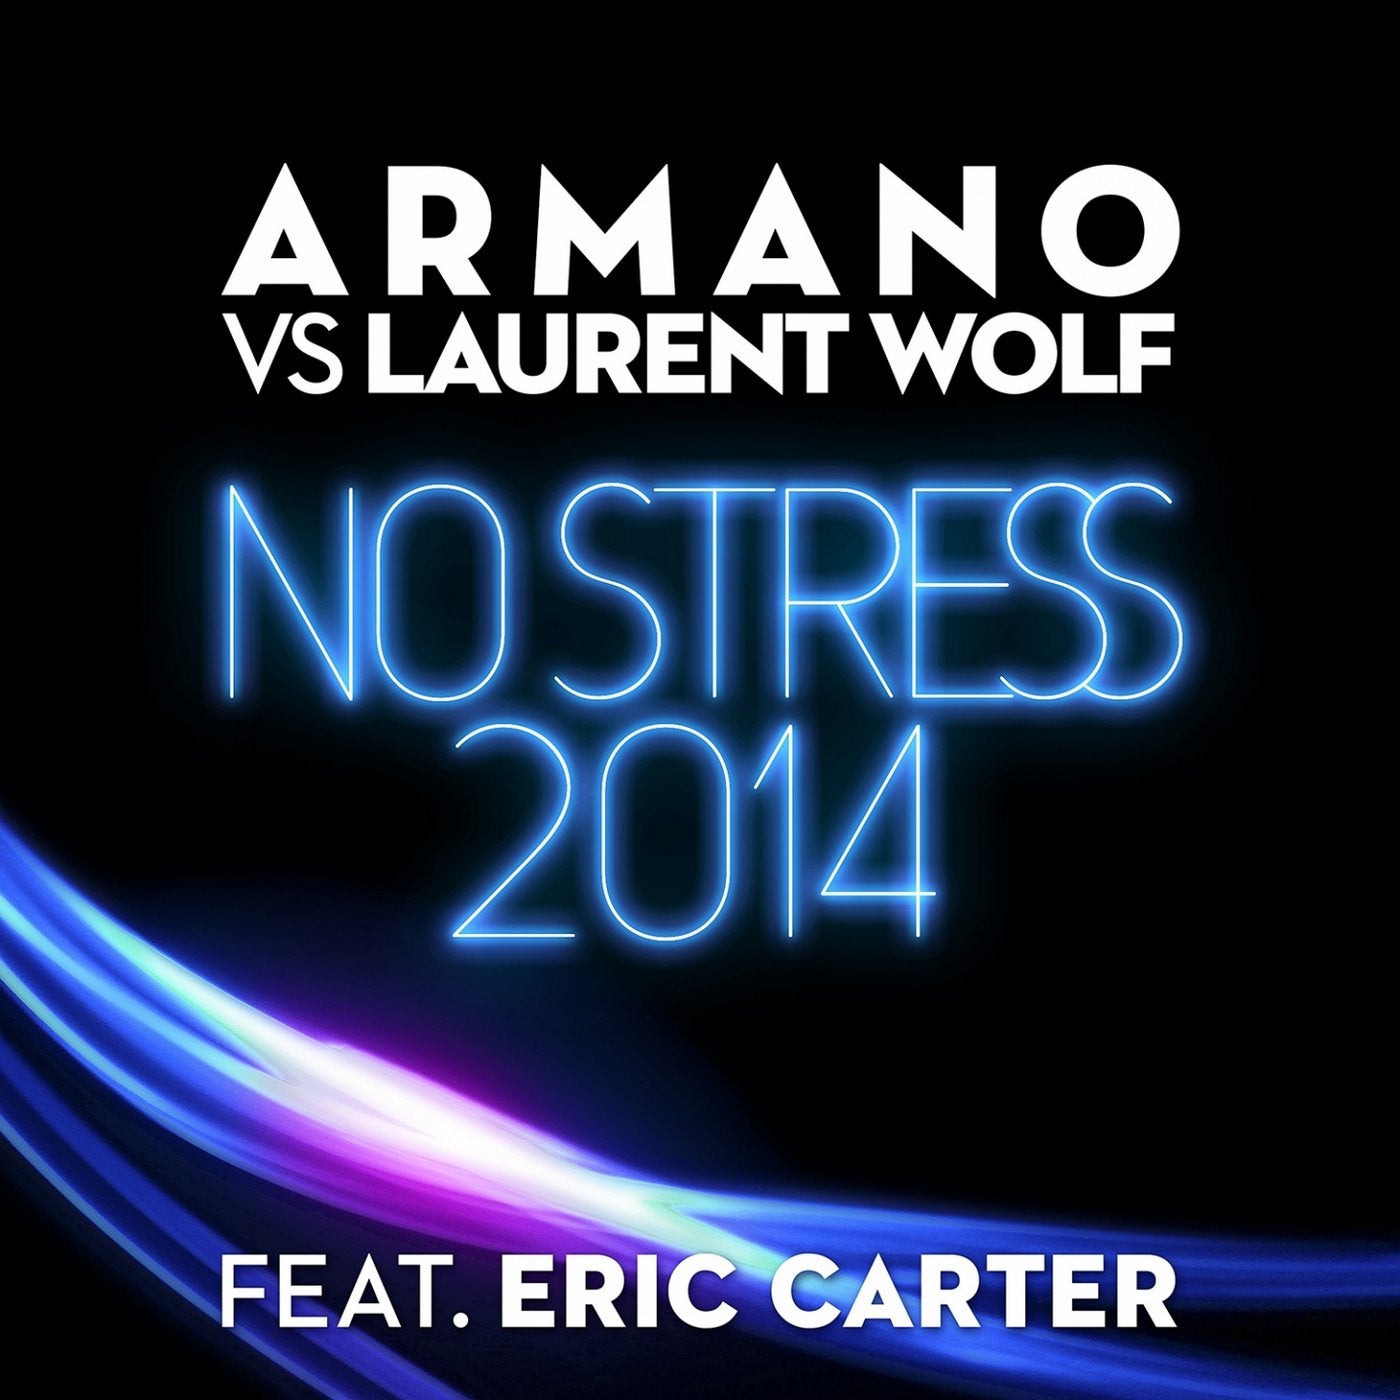 Wolf stress. No stress Лоран Вульф. Армано. Laurent-Wolf-no-stress-Radio-Edit. No stress Laurent Wolf текст.